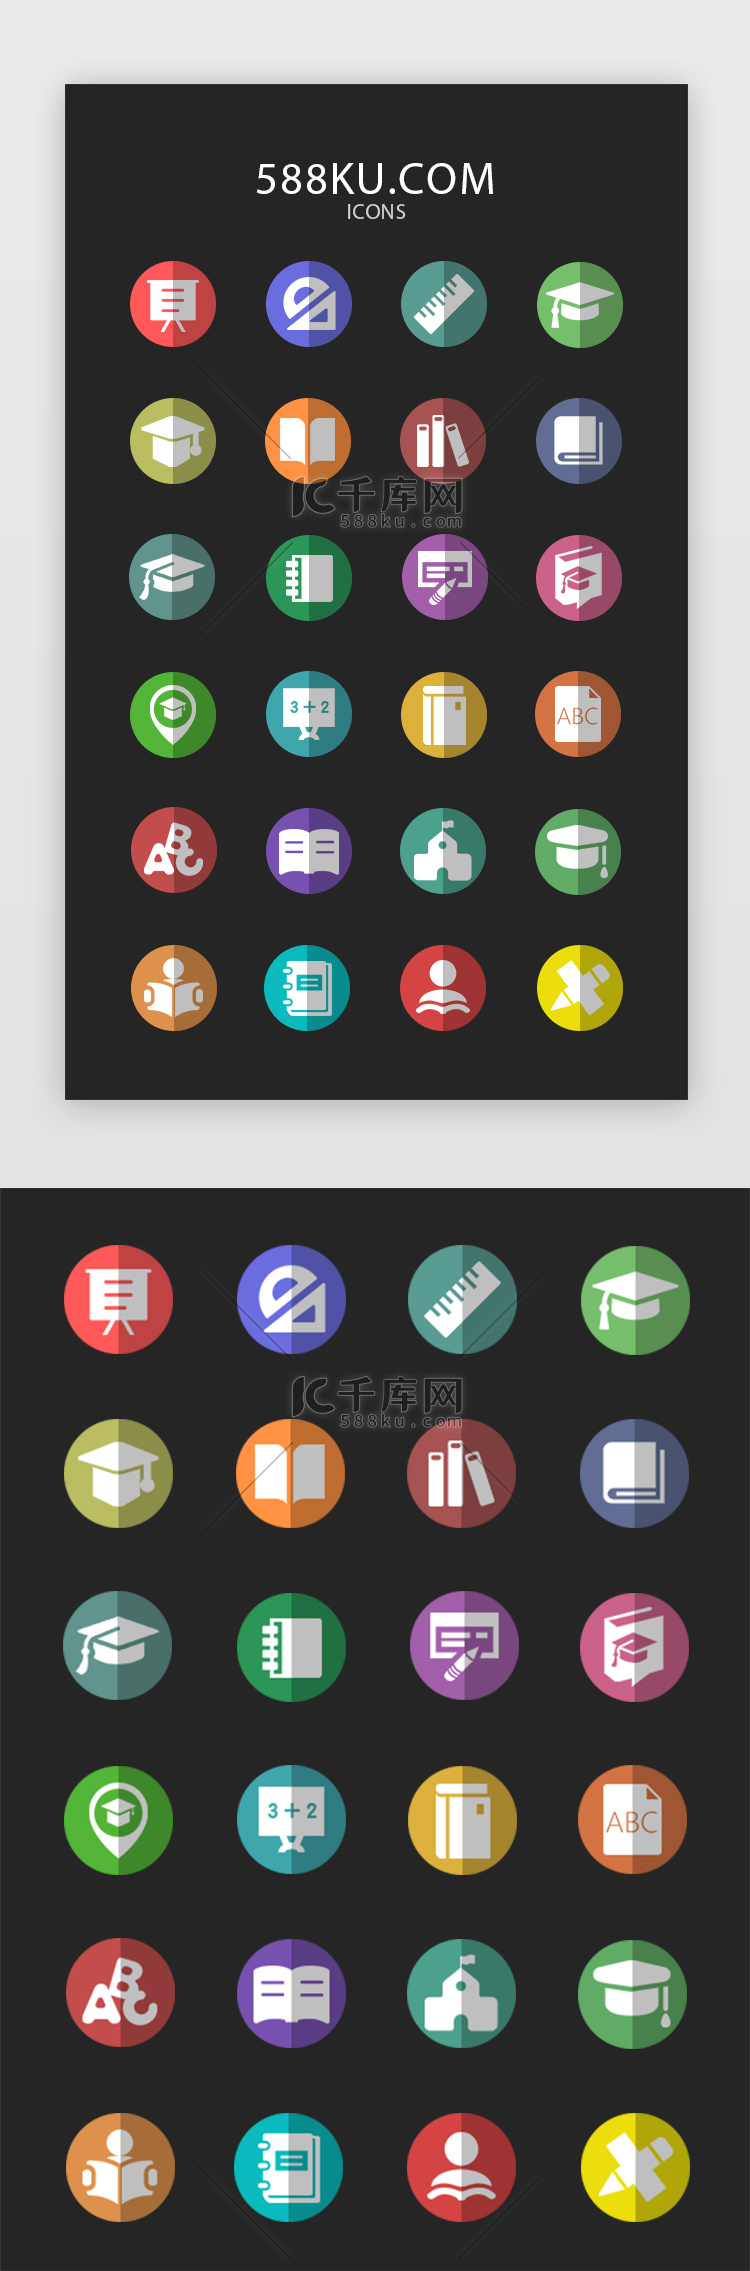 彩色扁平投影教育图标icon